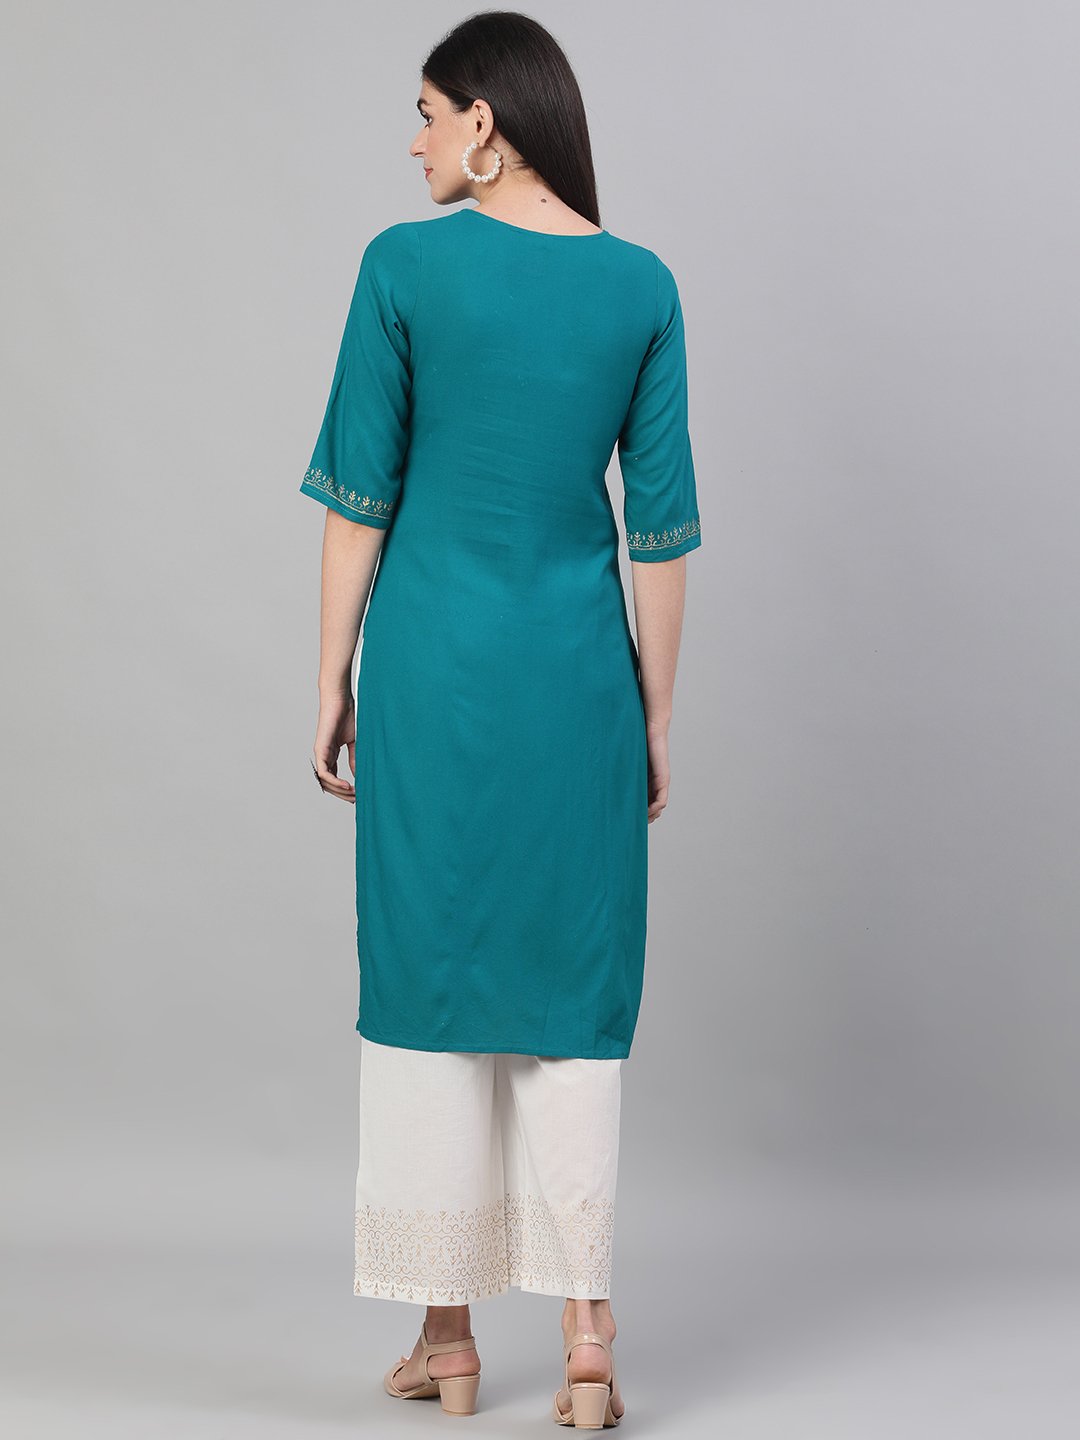 Women's Rama Green And White Three-Quarter Sleeves Block Printed Straight Kurta With Palazzo And Pockets - Nayo Clothing